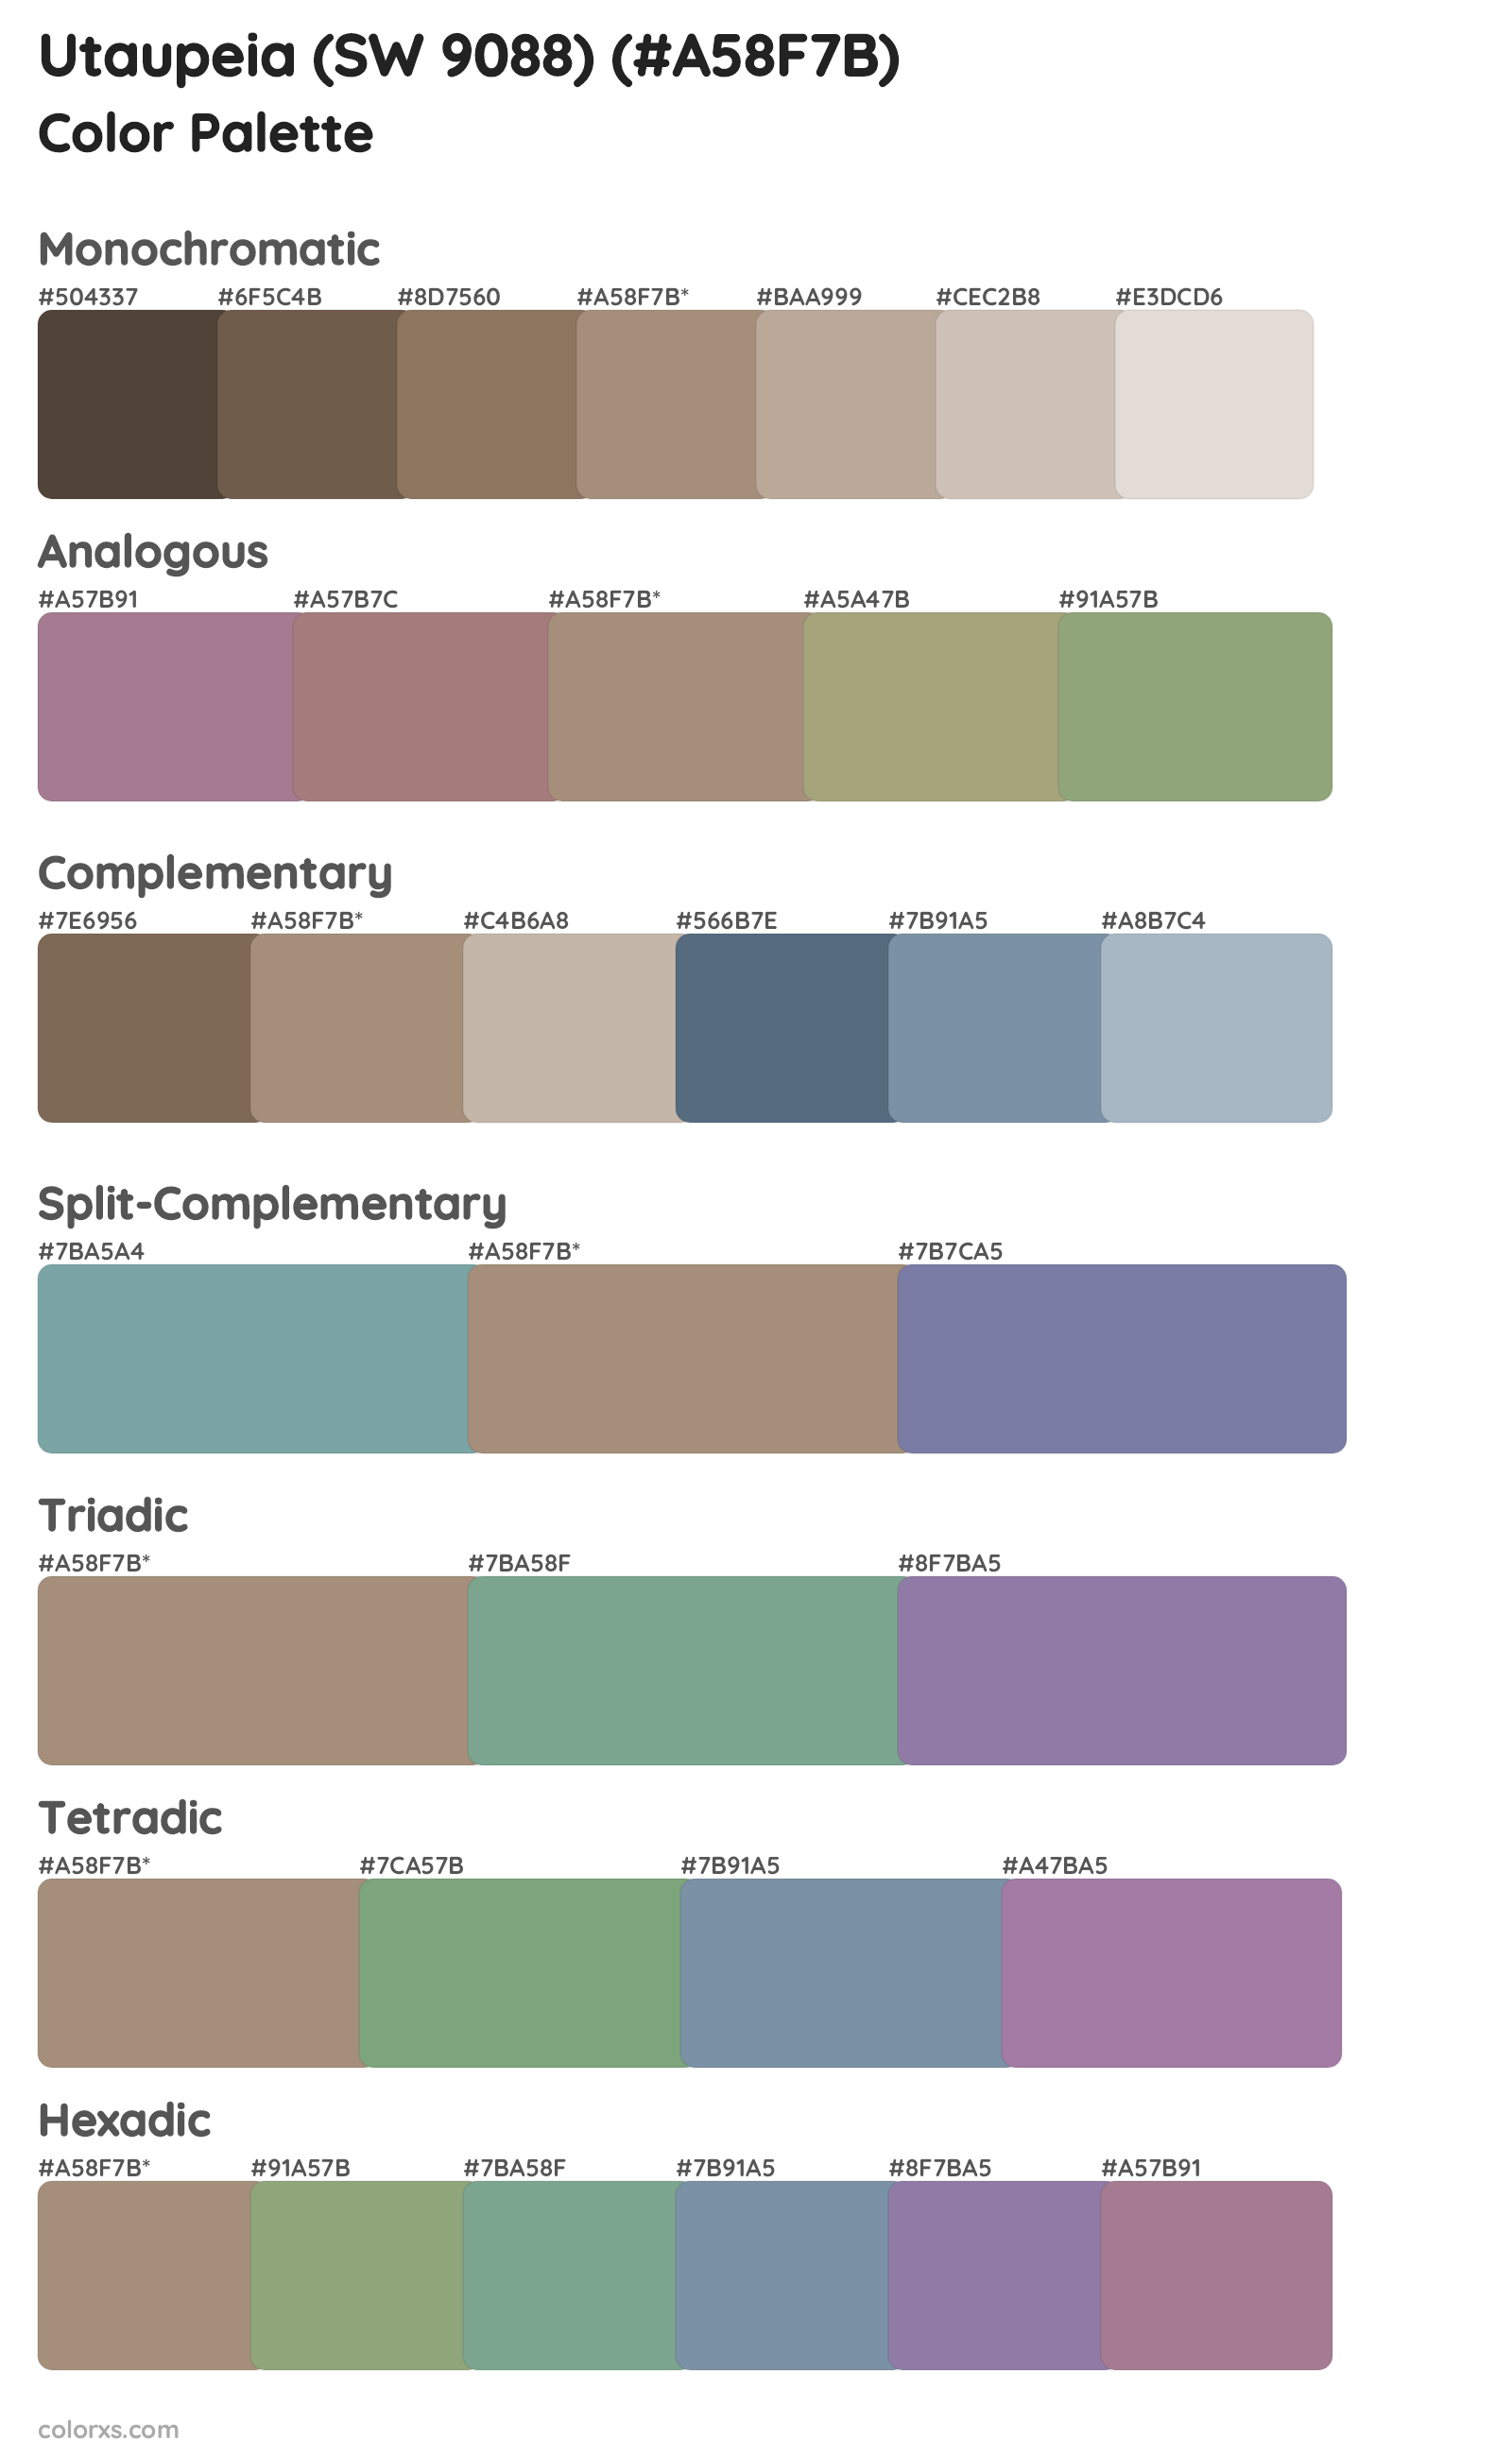 Utaupeia (SW 9088) Color Scheme Palettes